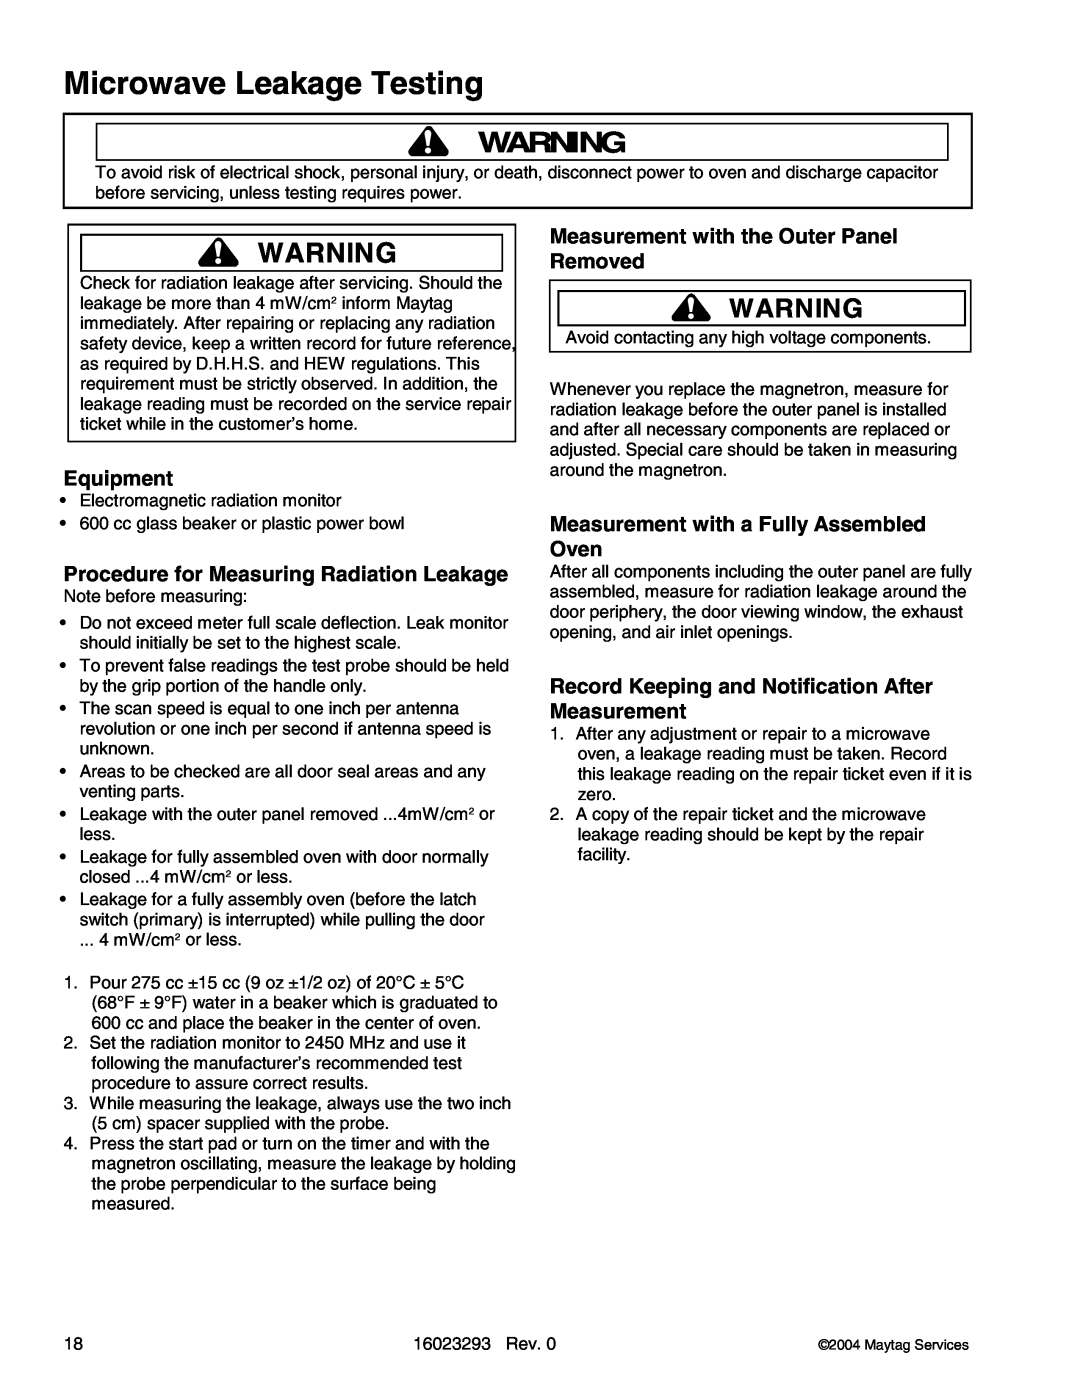 Maytag RCS10DA, RFS manual Microwave Leakage Testing, Equipment, Procedure for Measuring Radiation Leakage 